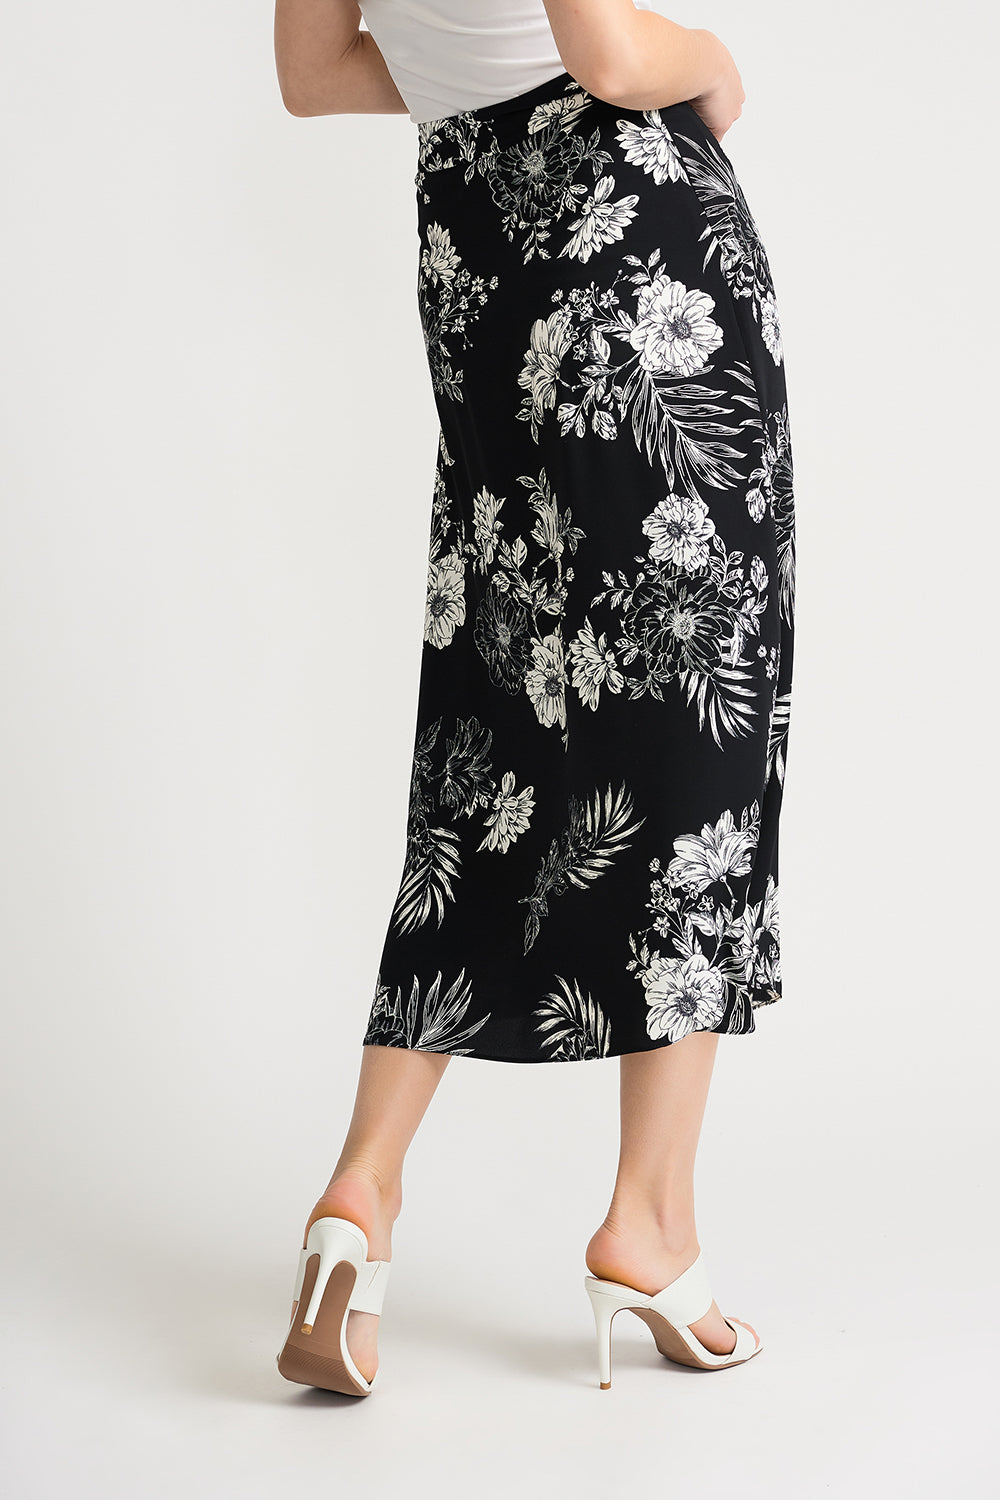 Joseph Ribkoff Black-Vanilla Skirt Style 202256